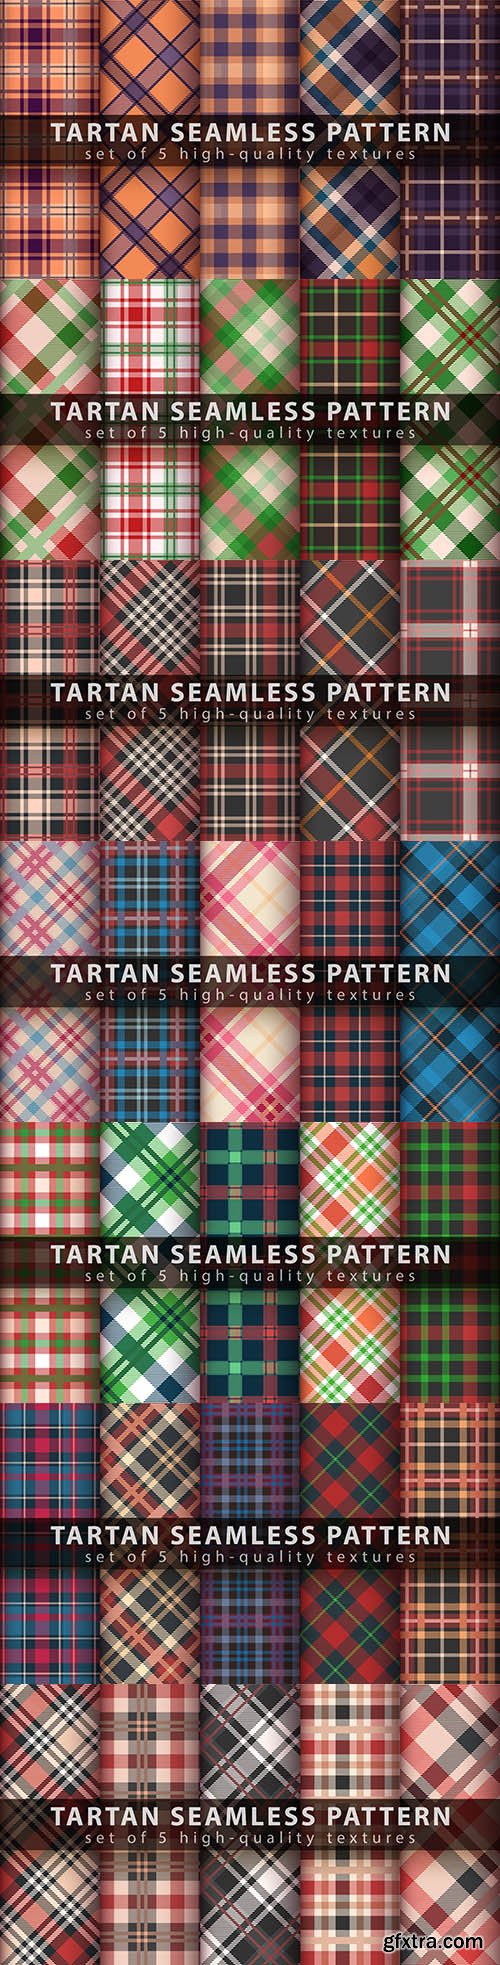 Classic tartan seamless pattern design set illustration
